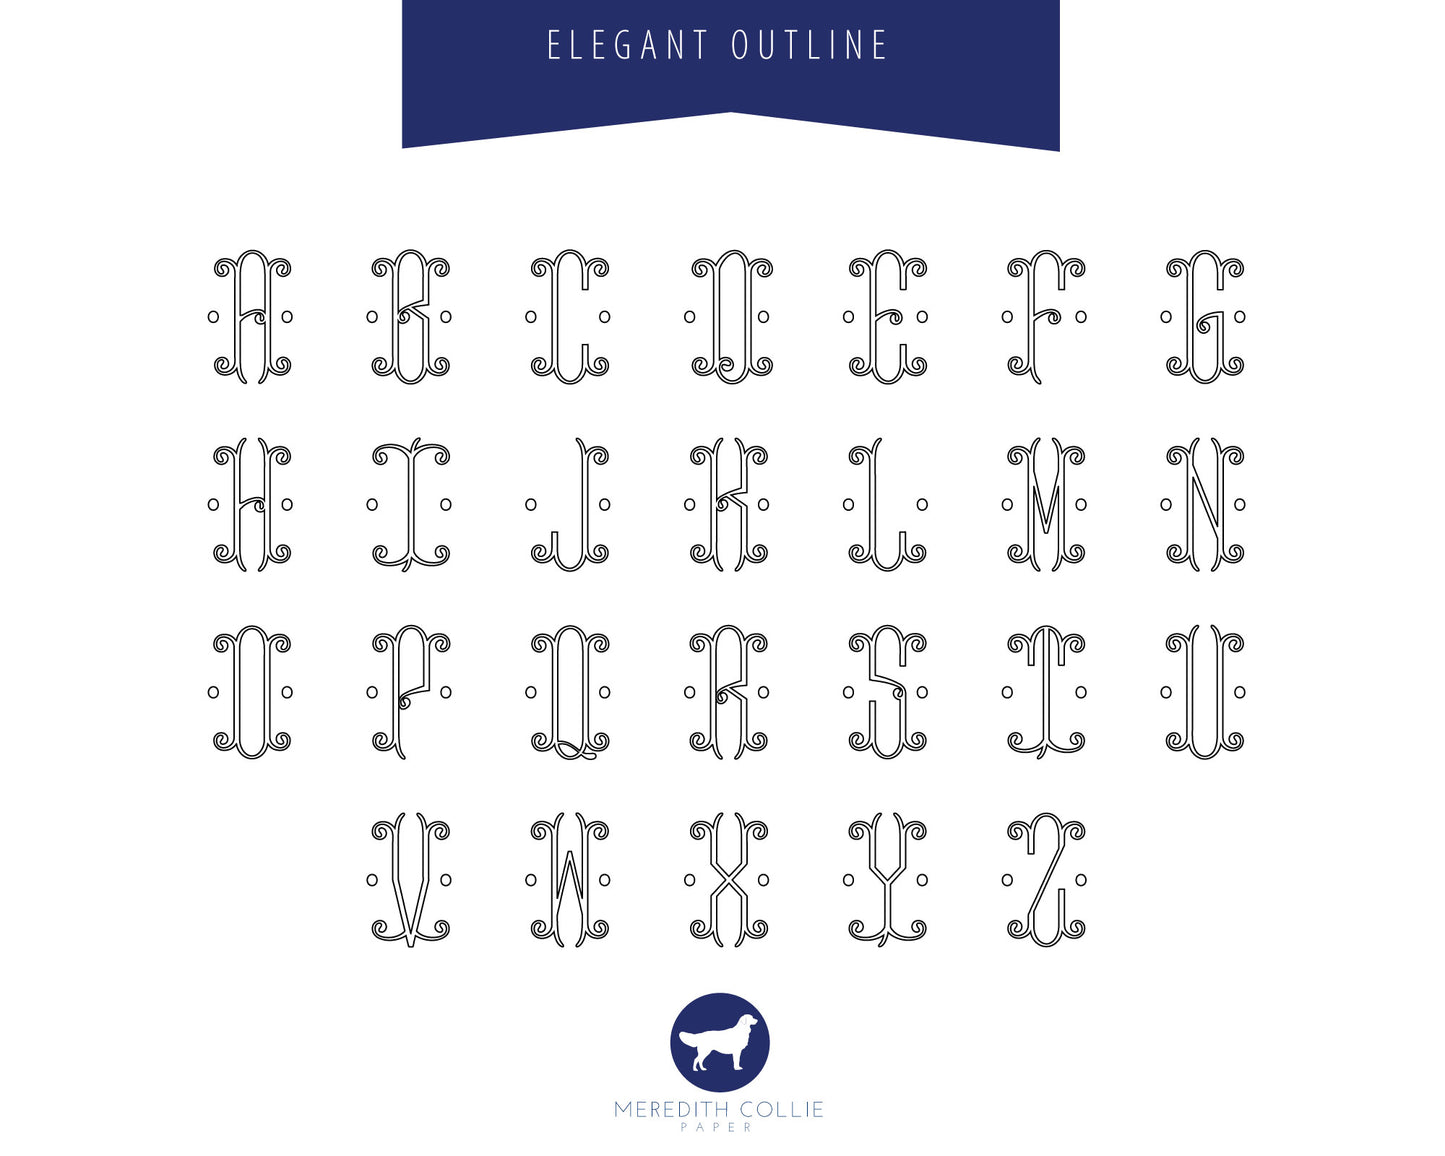 Elegant Outline Single Initial Monogram Notepad